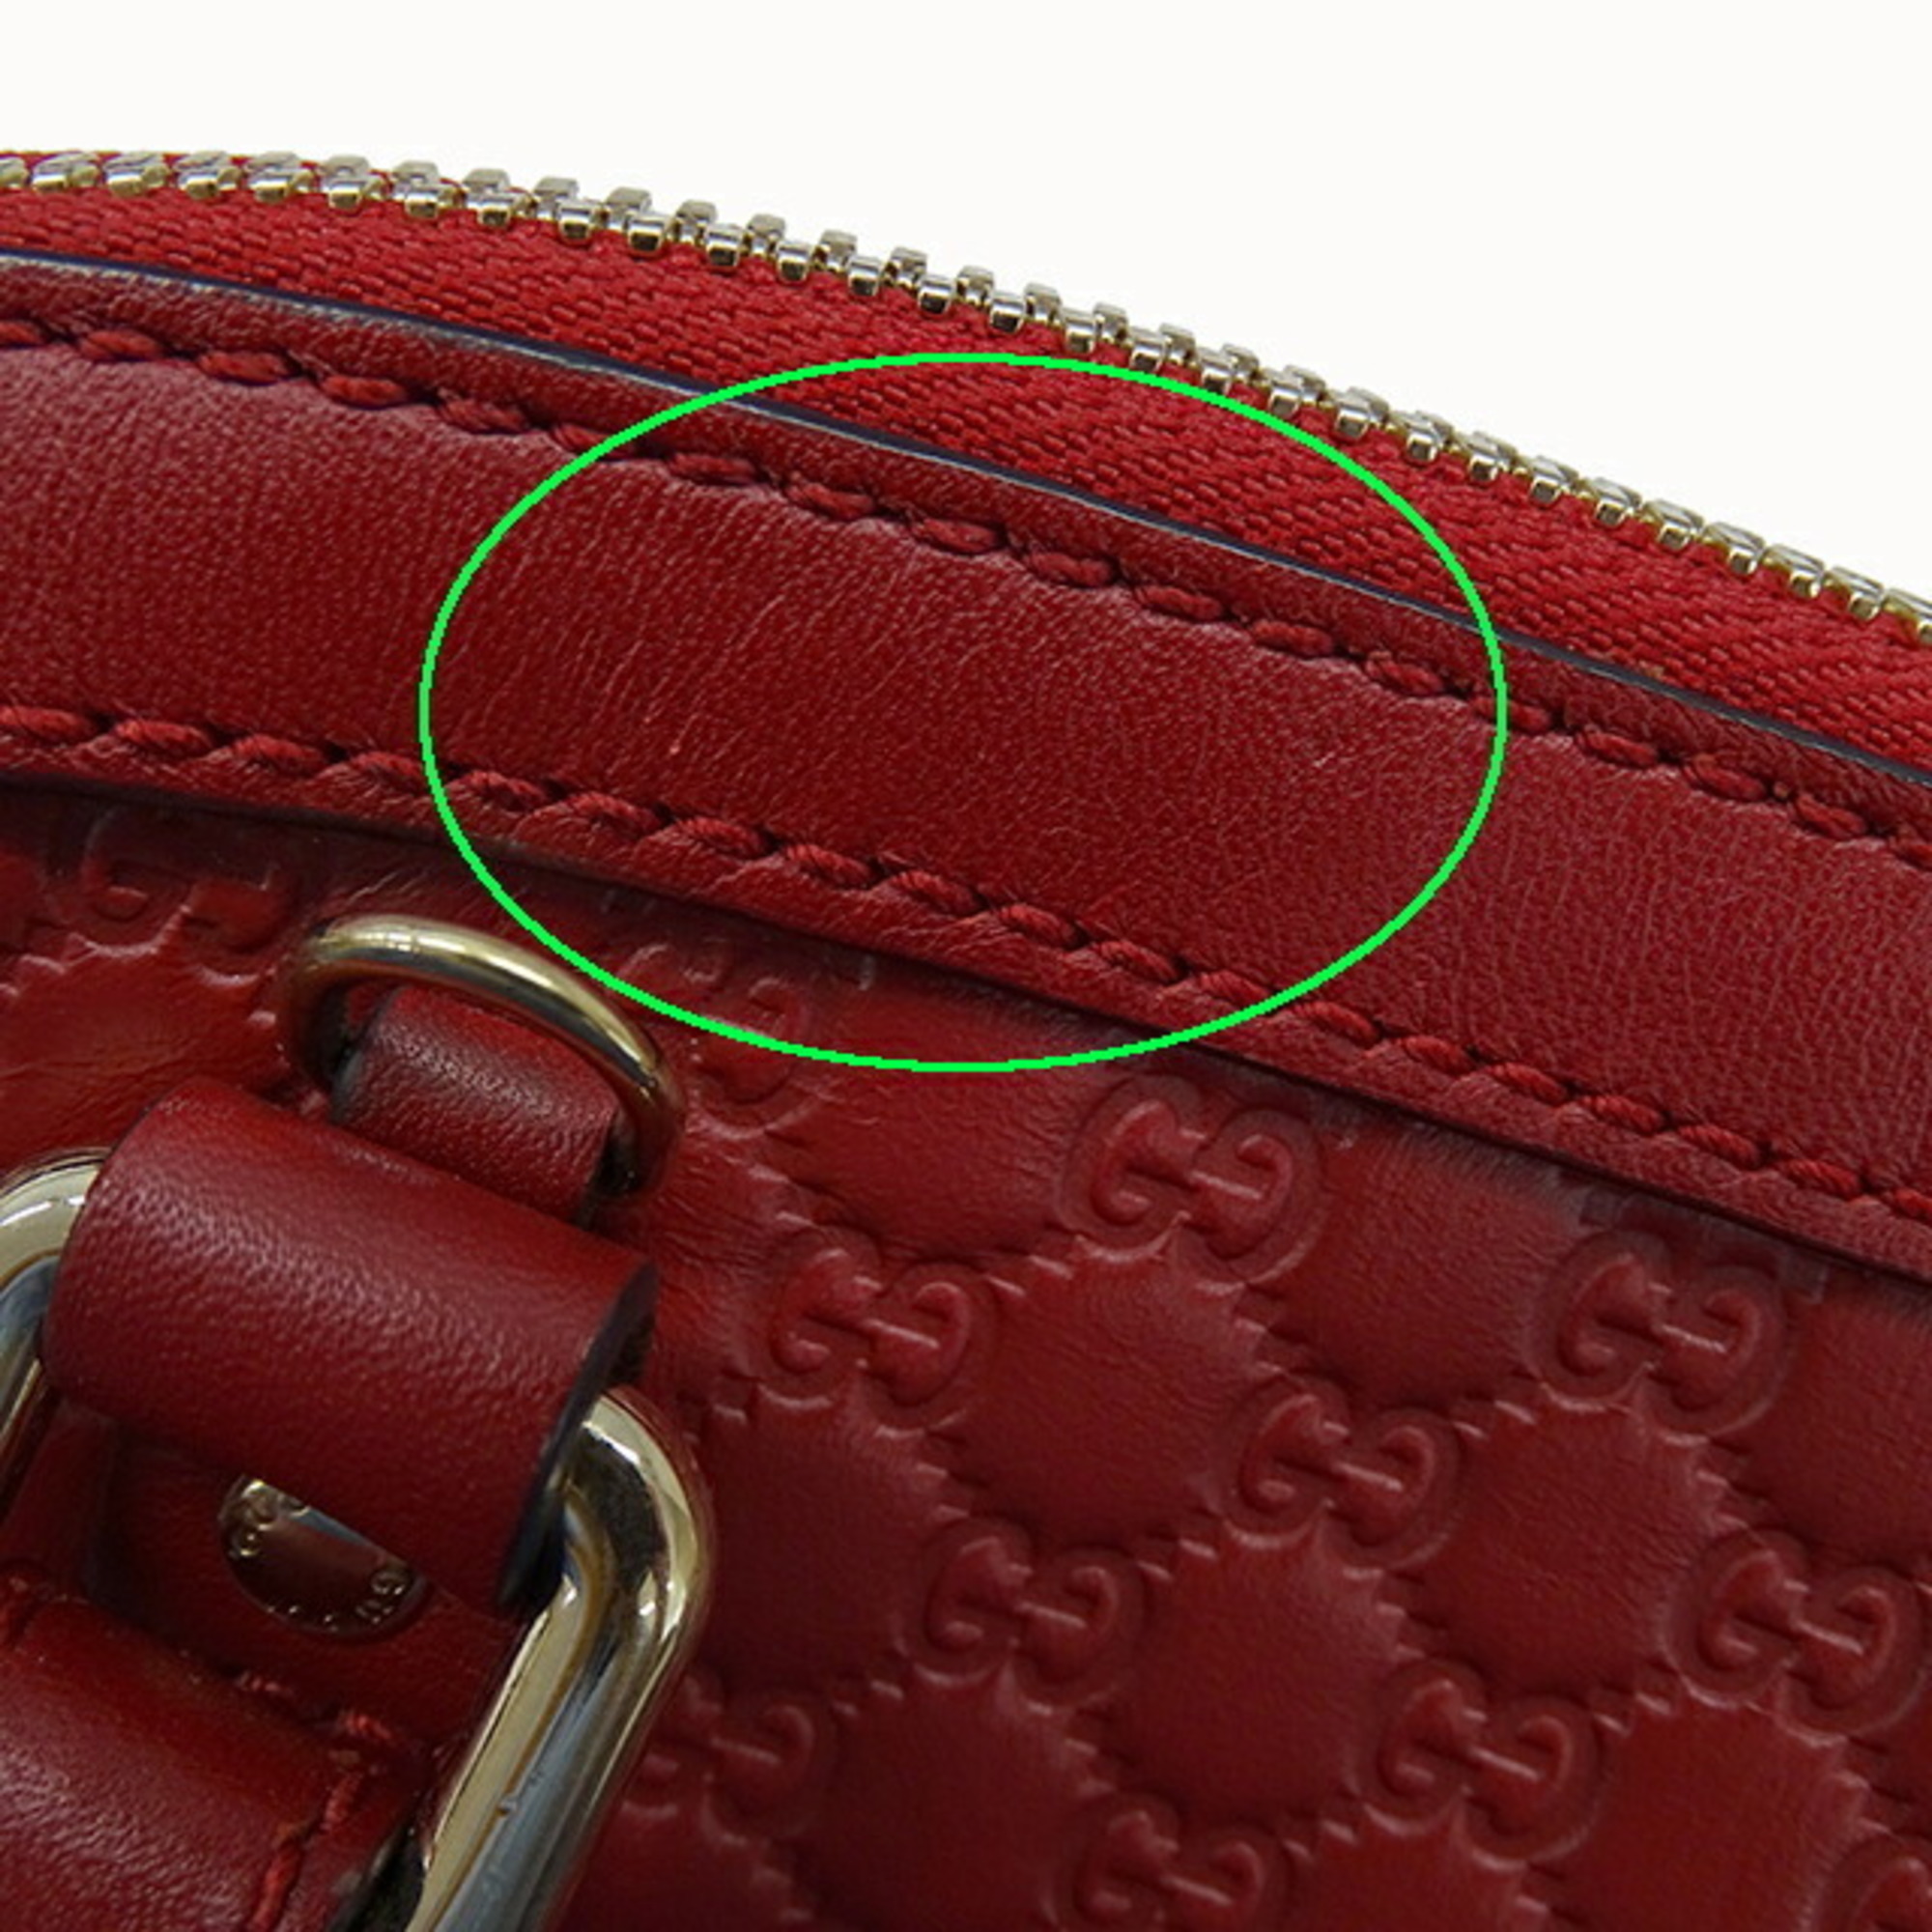 GUCCI Bag for Women Micro GG Shima Handbag Shoulder 2way Red 449654 Compact